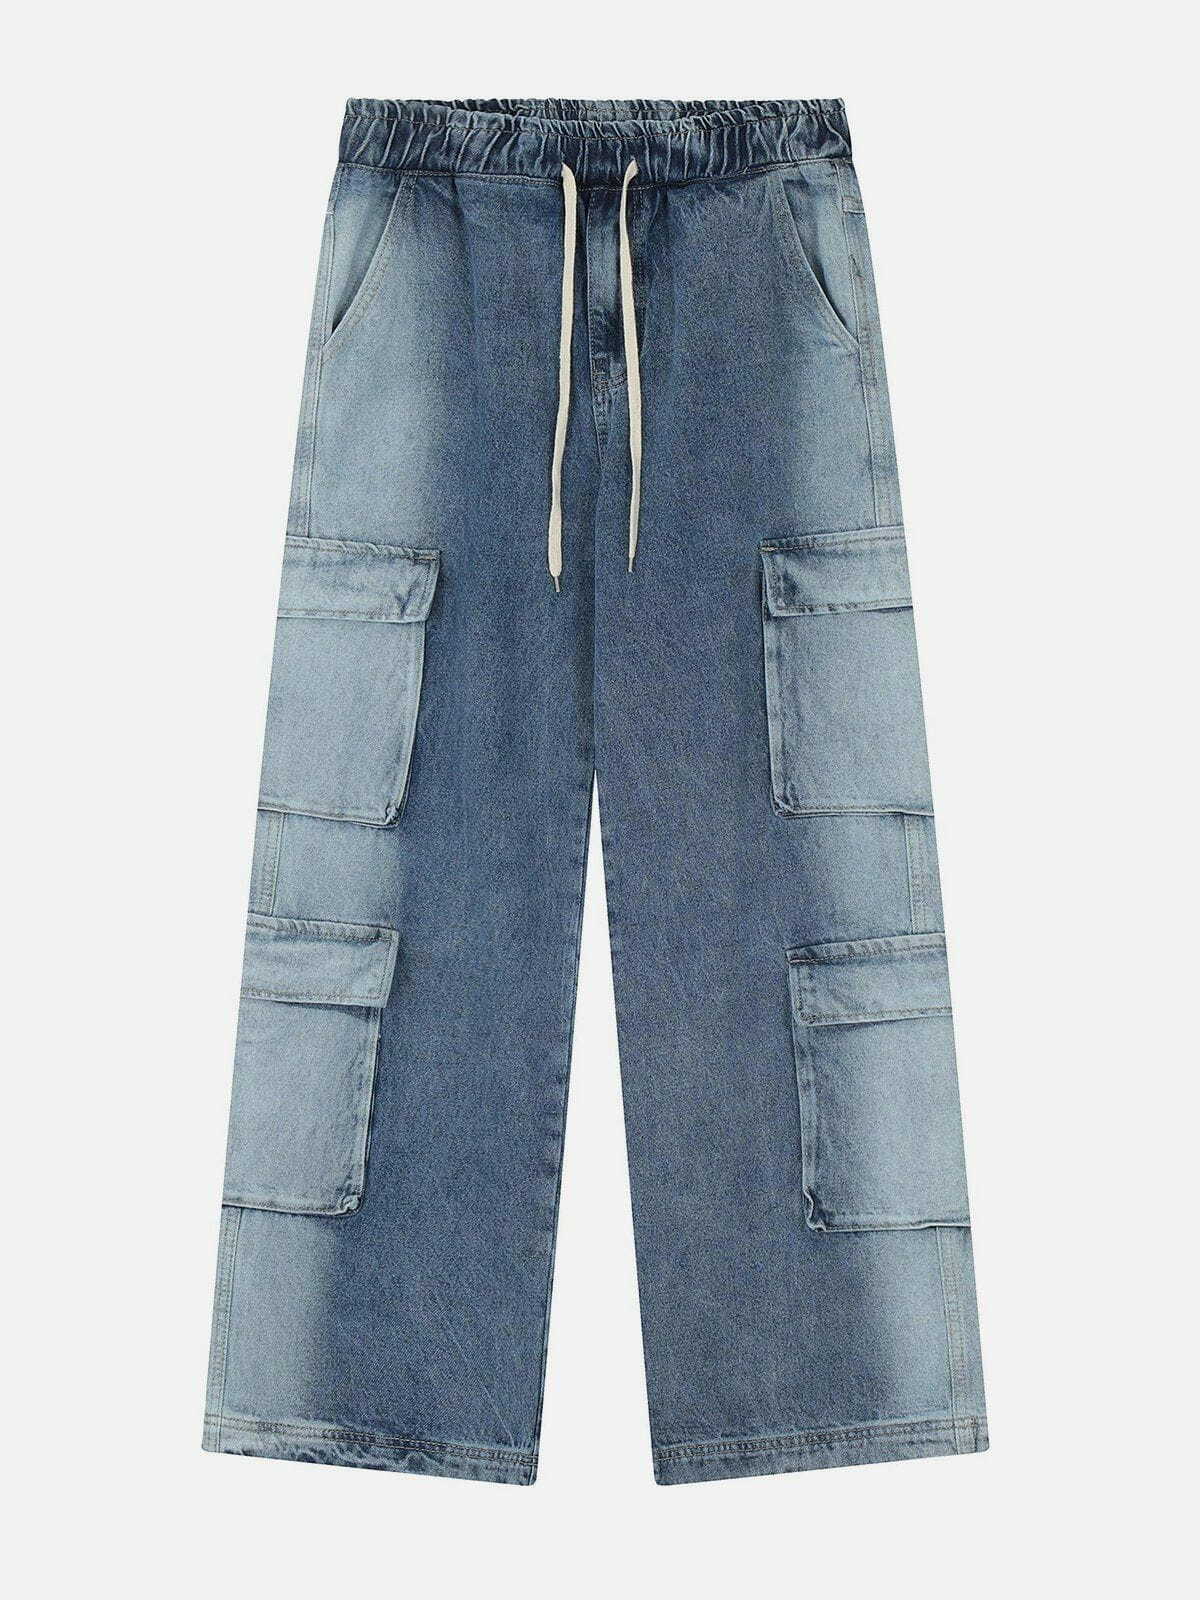 waterwashed multipocket jeans edgy & functional streetwear 4183